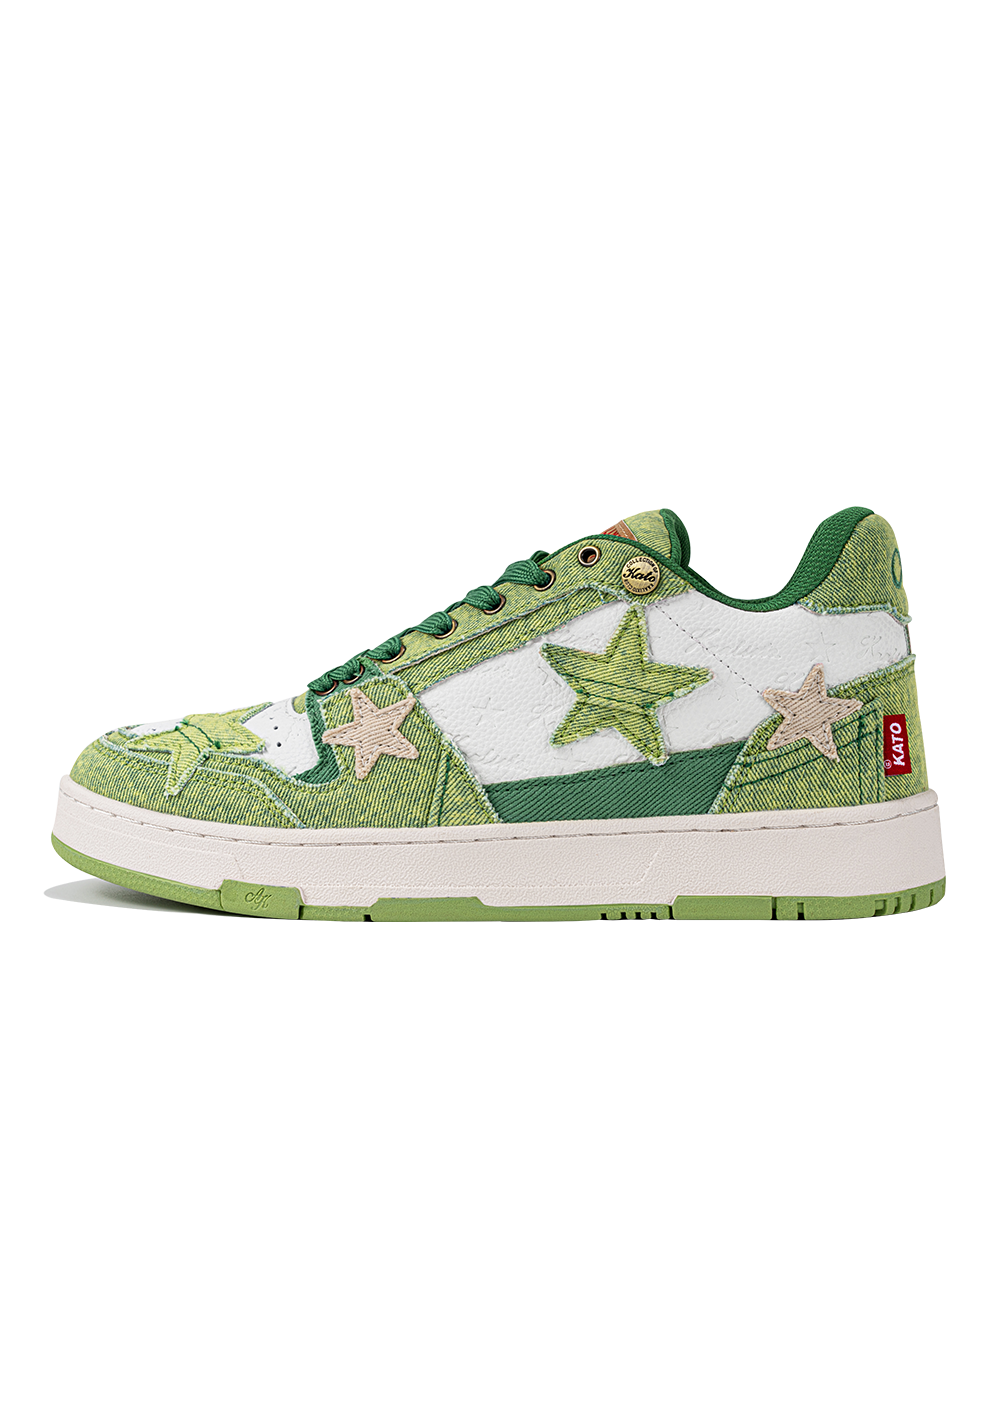 Retro Star Sneakers - Avocado